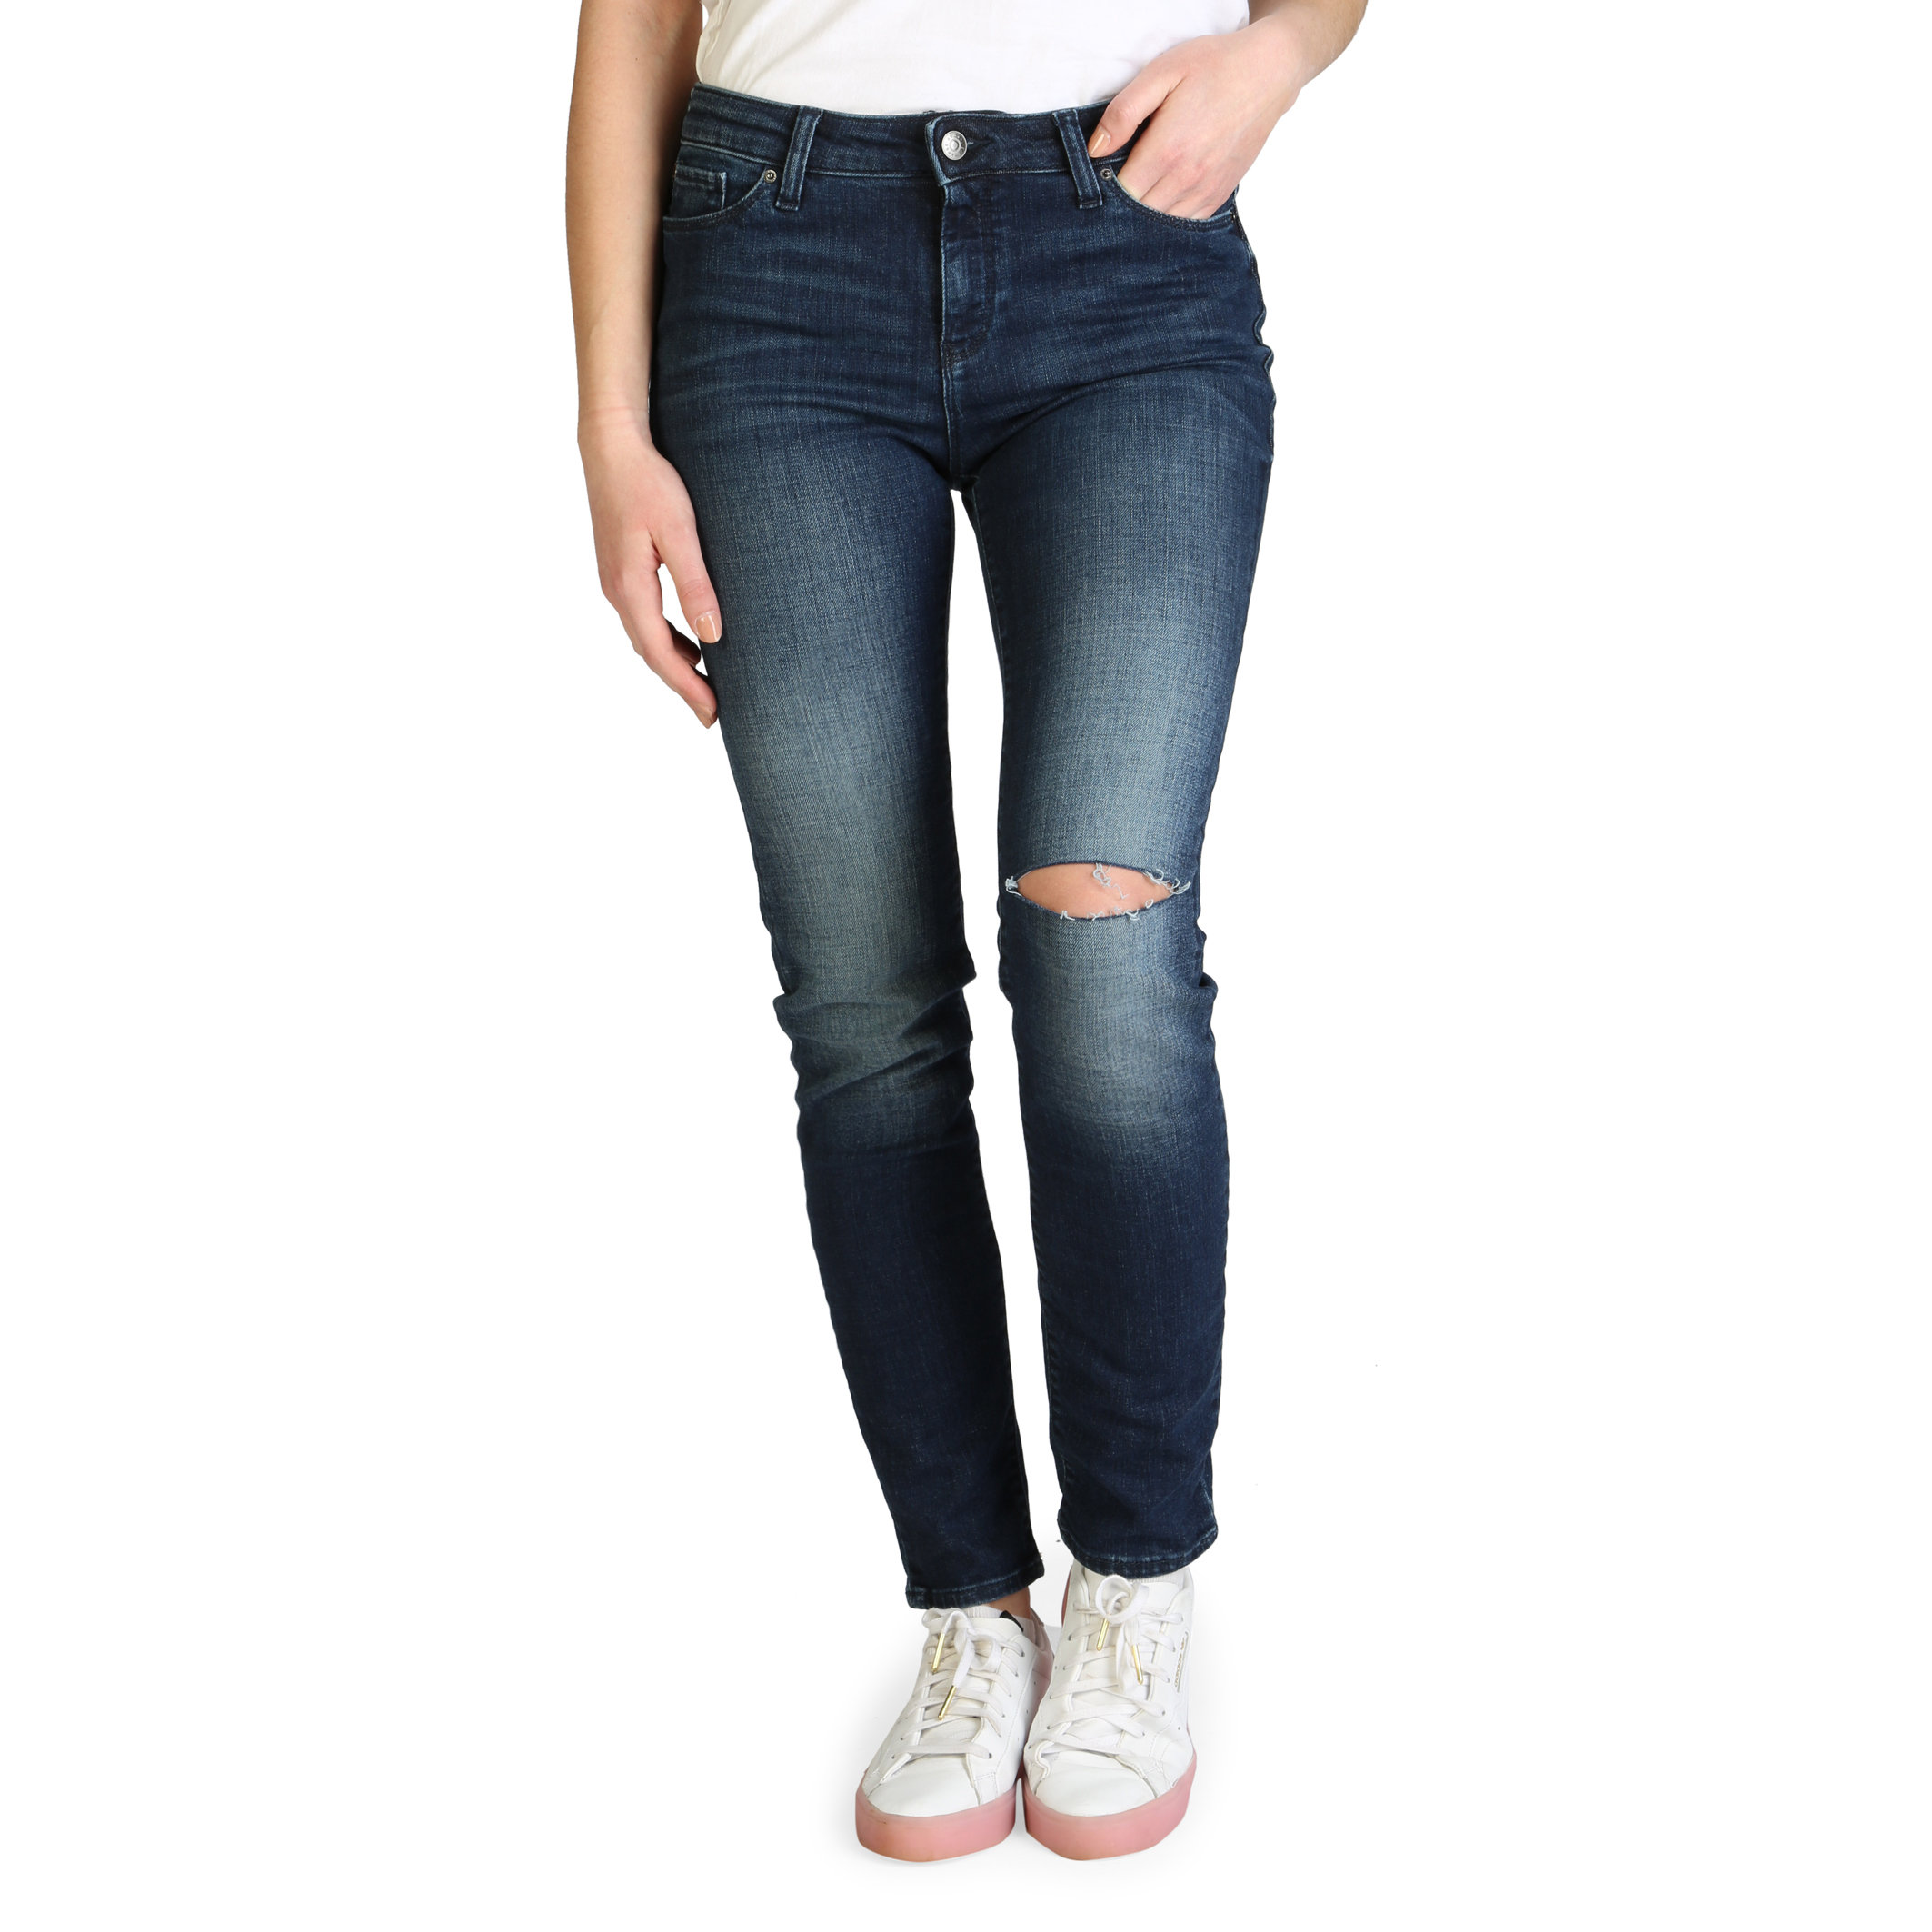 Jeans azules para mujer - Armani Exchange - Compra en Ventis.